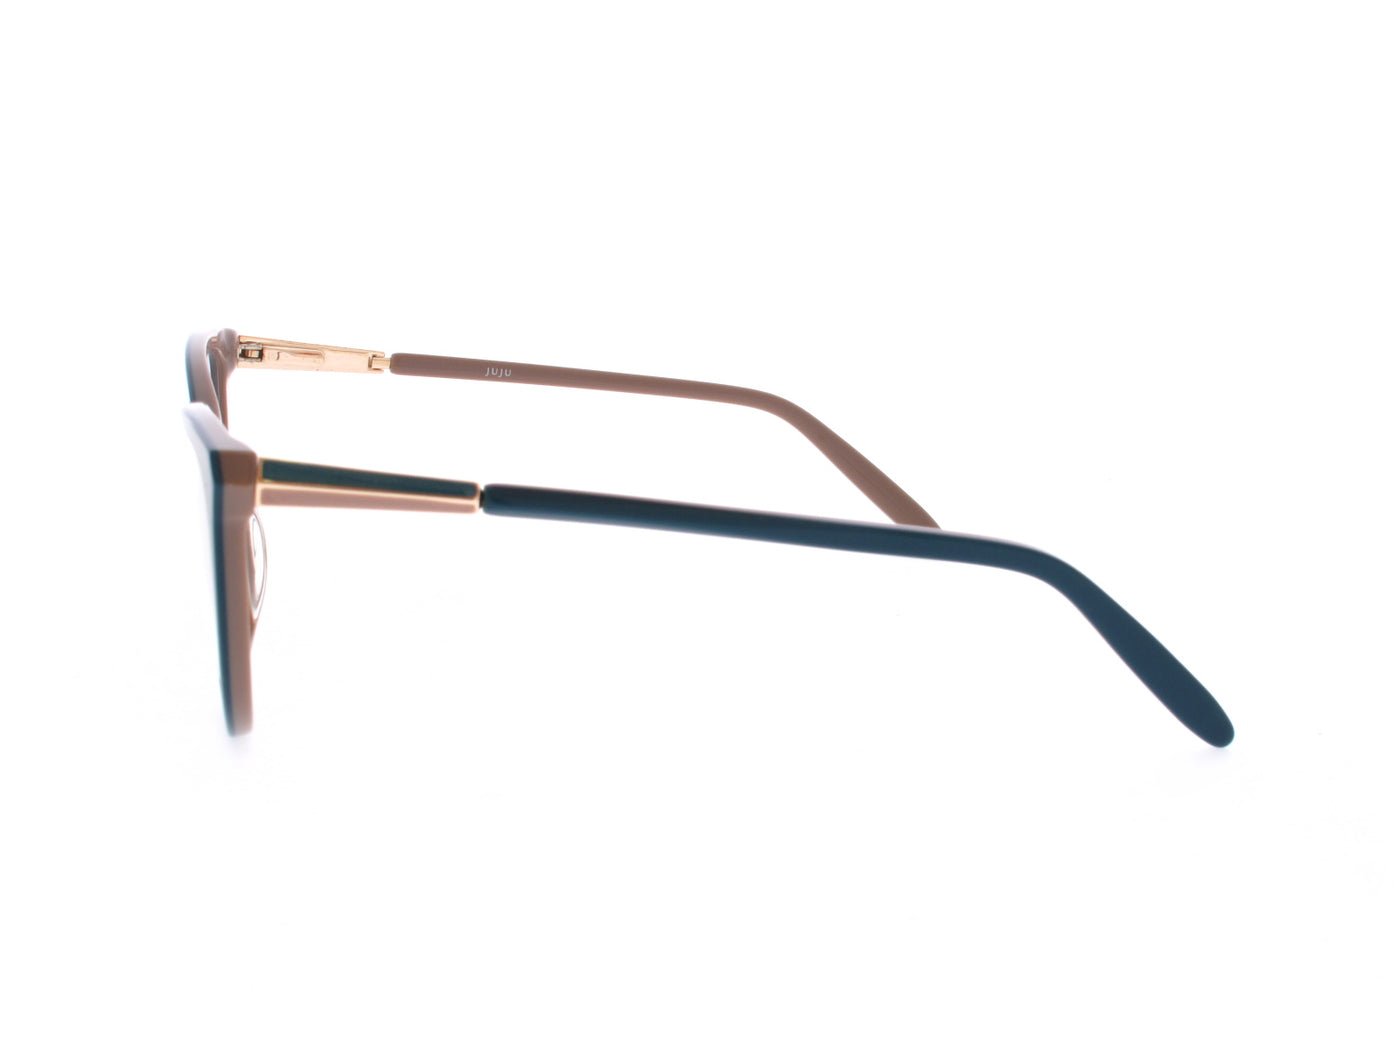 Cateye Glasses 480234